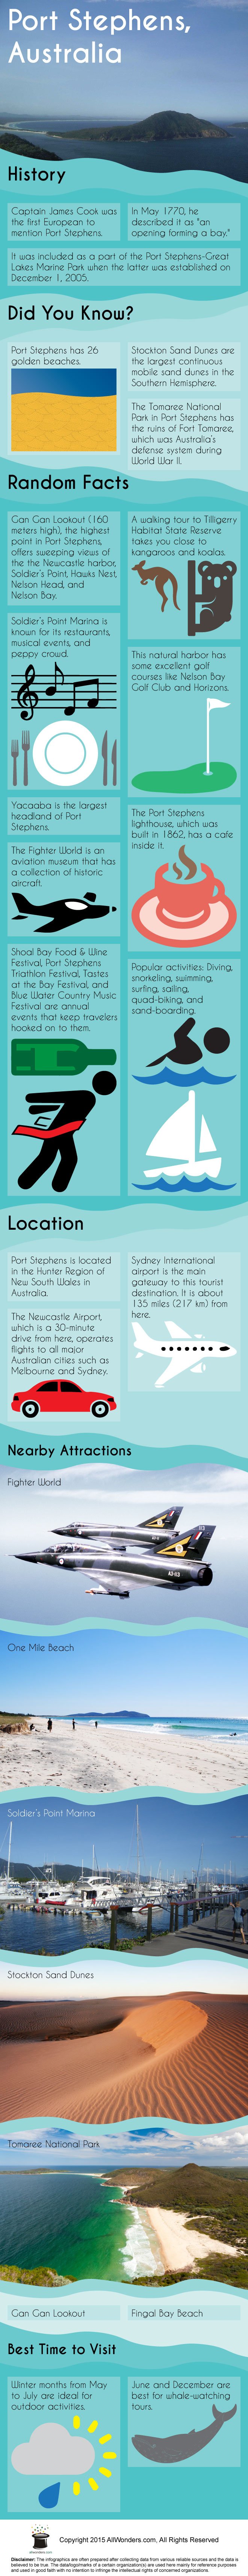 Port Stephens Infographic